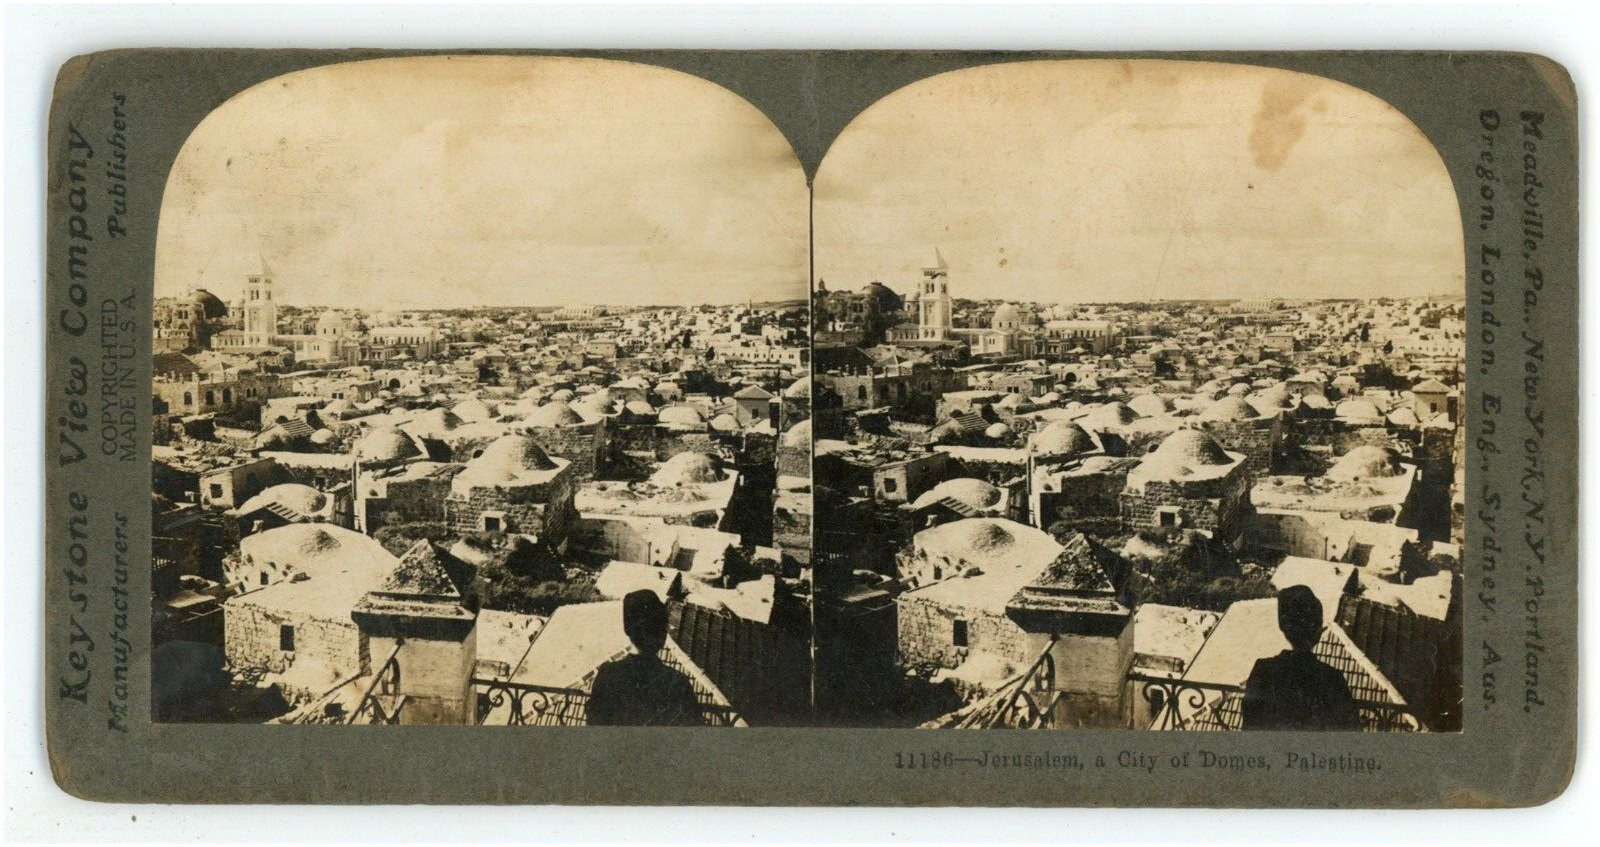 c1890's Keystone View Co. Stereoview Card 11186 Jerusalem a City of Domes